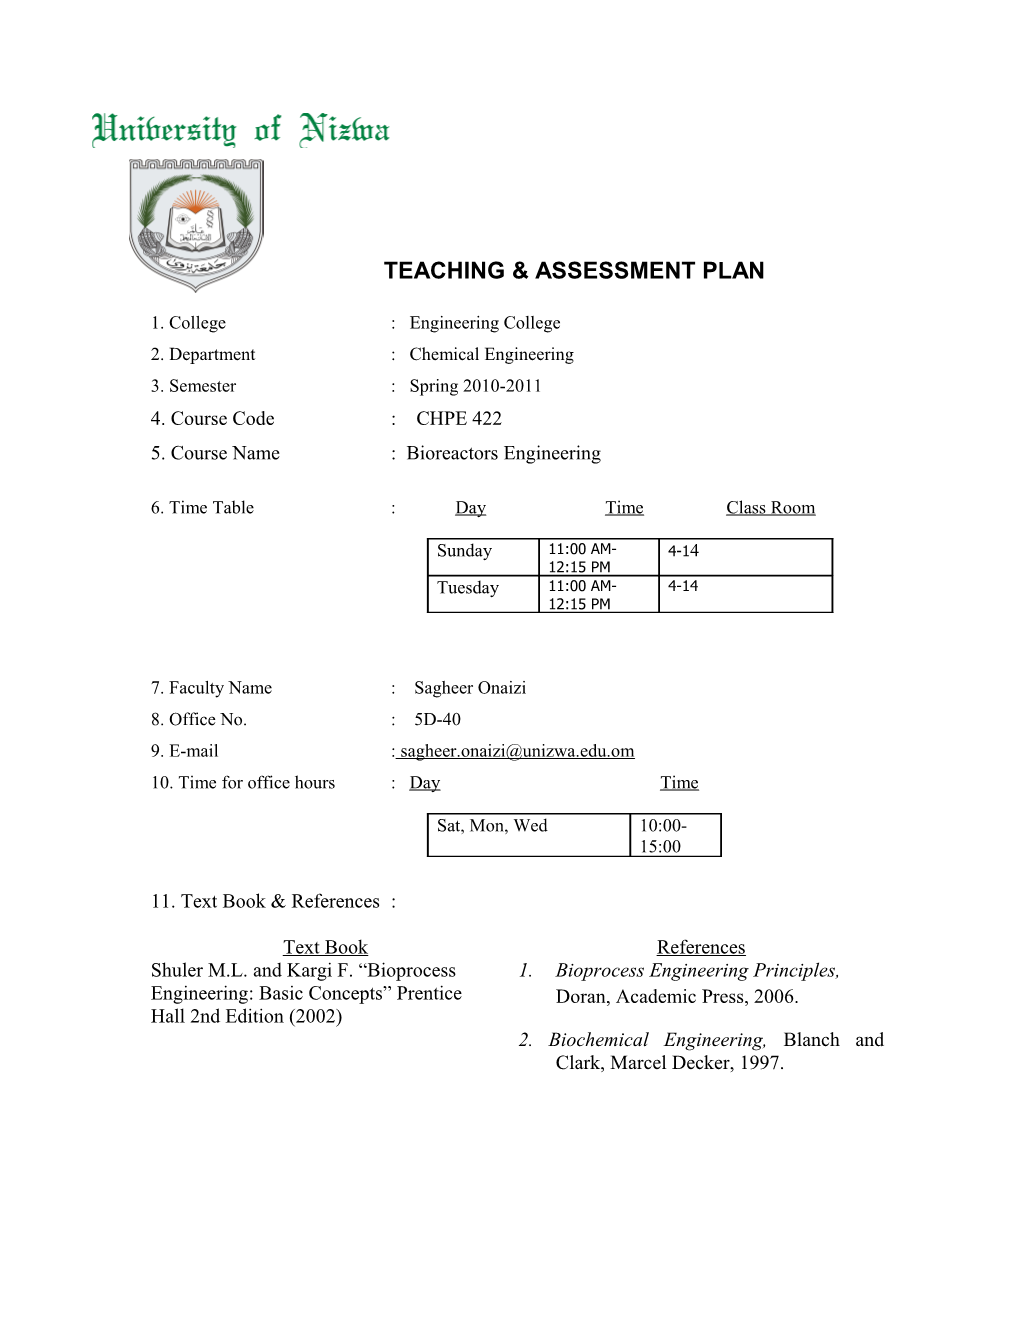 Teaching & Assessment Plan s3